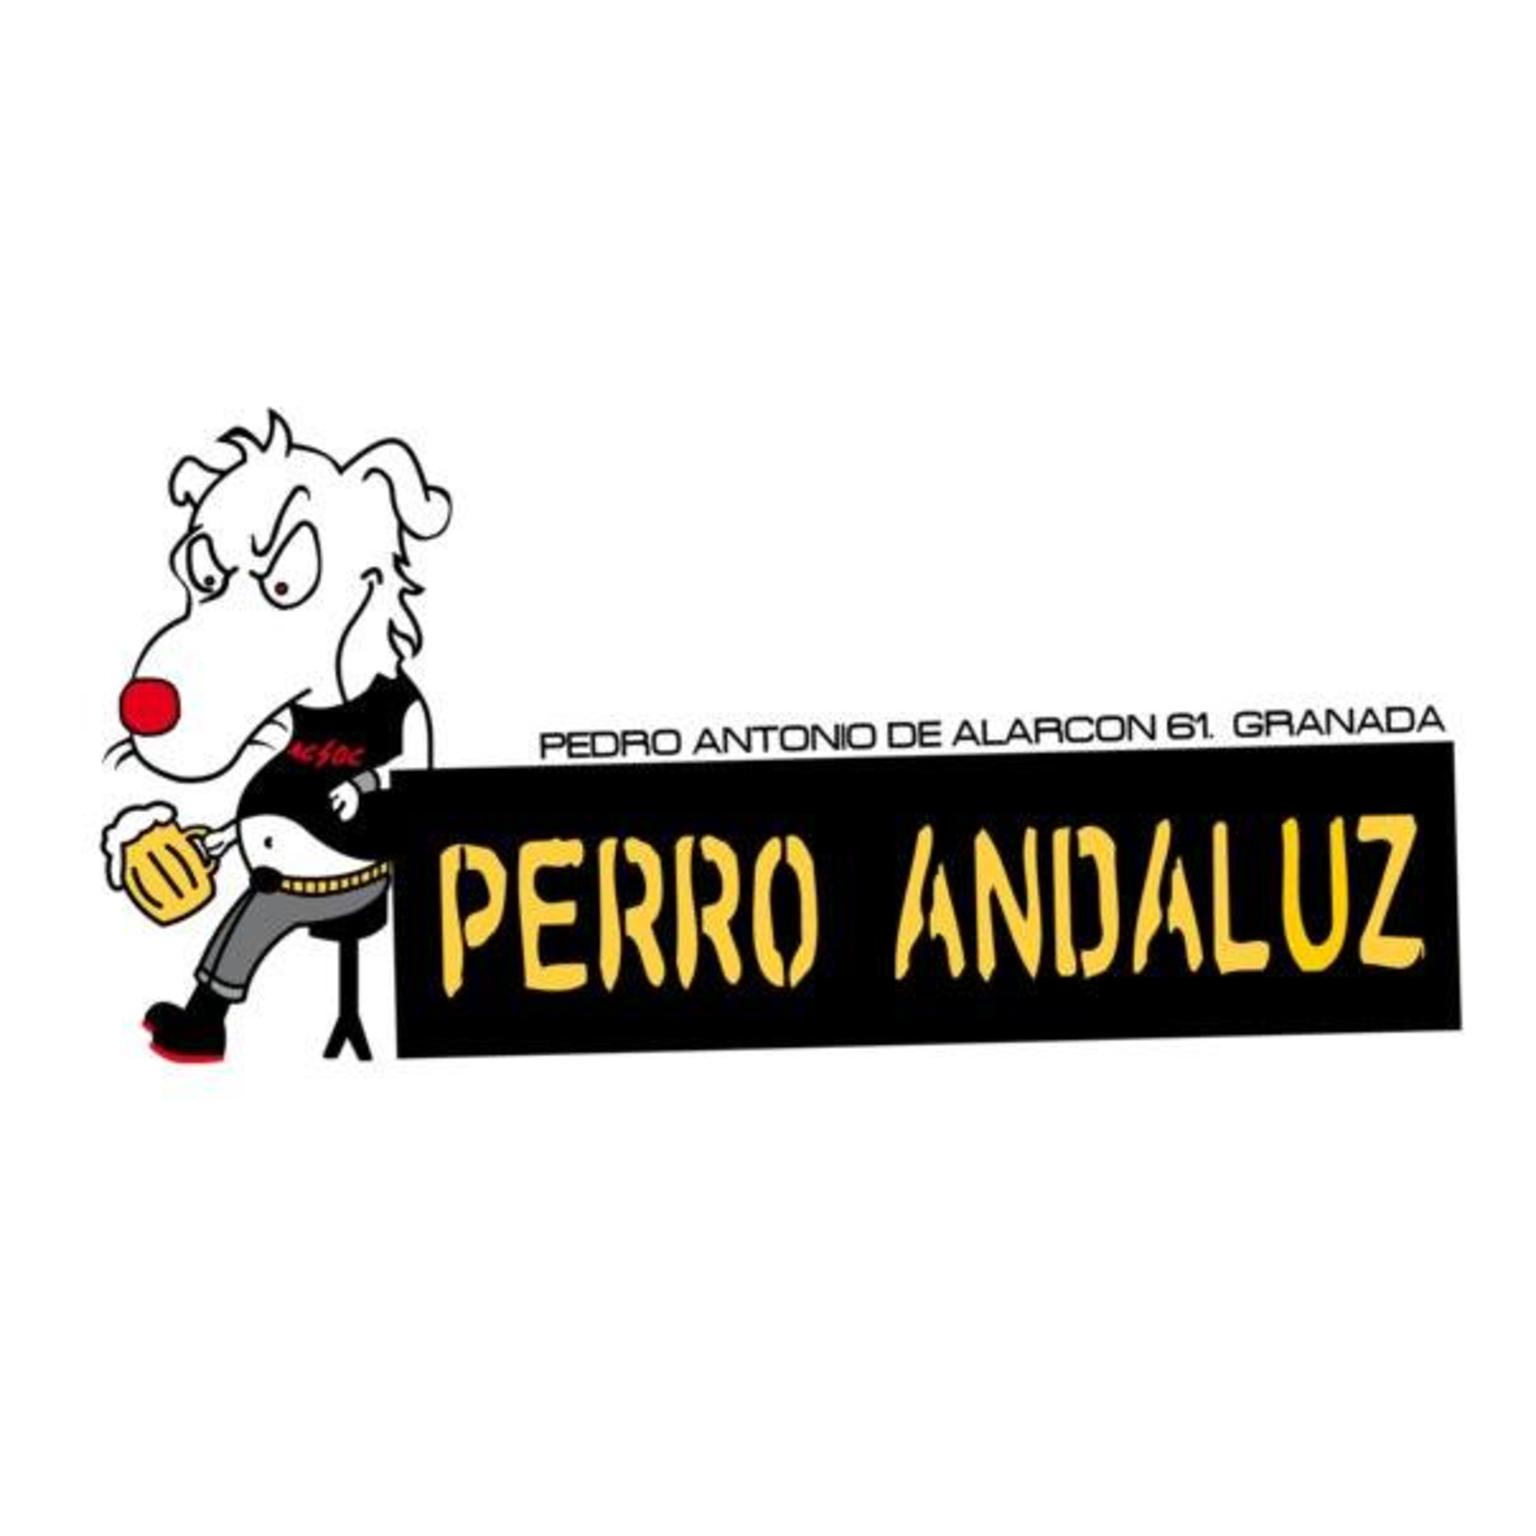 El Perro Andaluz